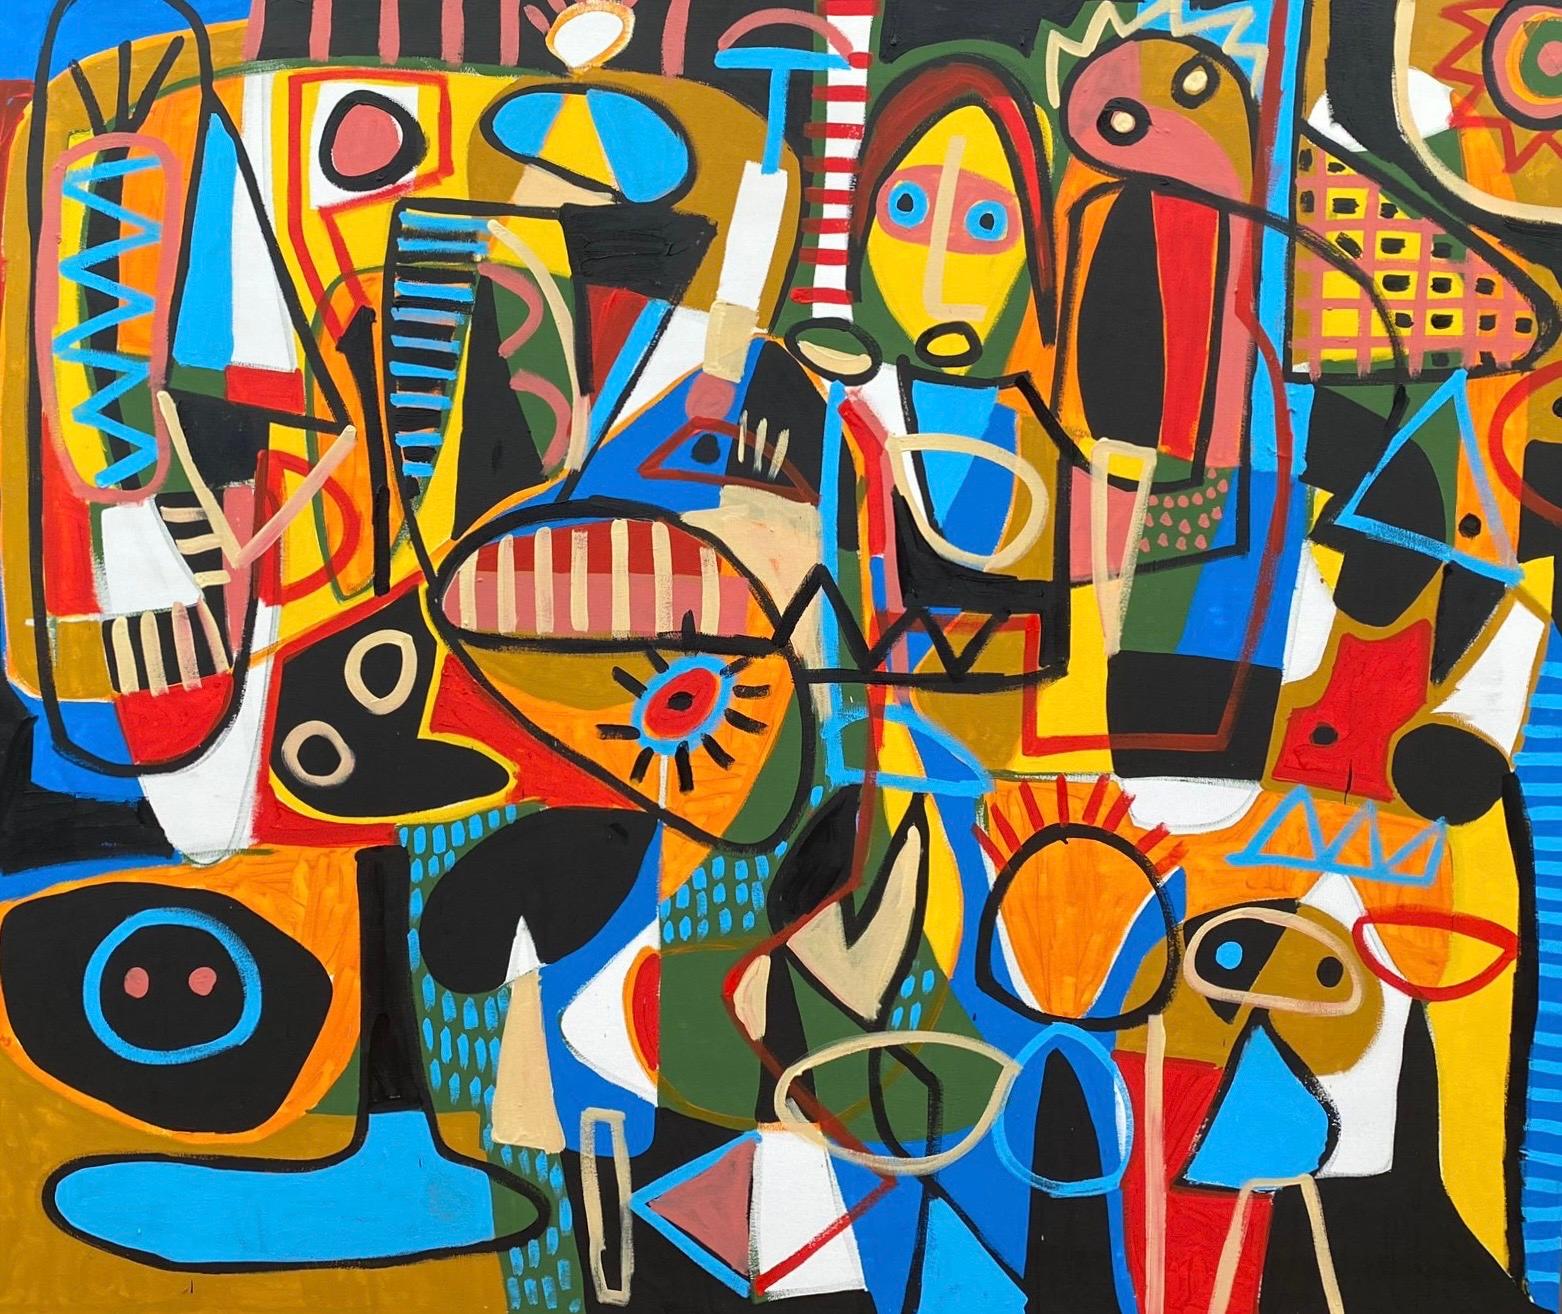 Contemporary Art, Abstract Painting
Acrylic on canvas
160x190cm
Signed 





About the artist
Enrique Pichardo (Mexico City, 1973) graduated from Escuela Nacional de Pintura, Escultura y Grabado (ENPEG) “La Esmeralda”. As a Mexican Contemporary